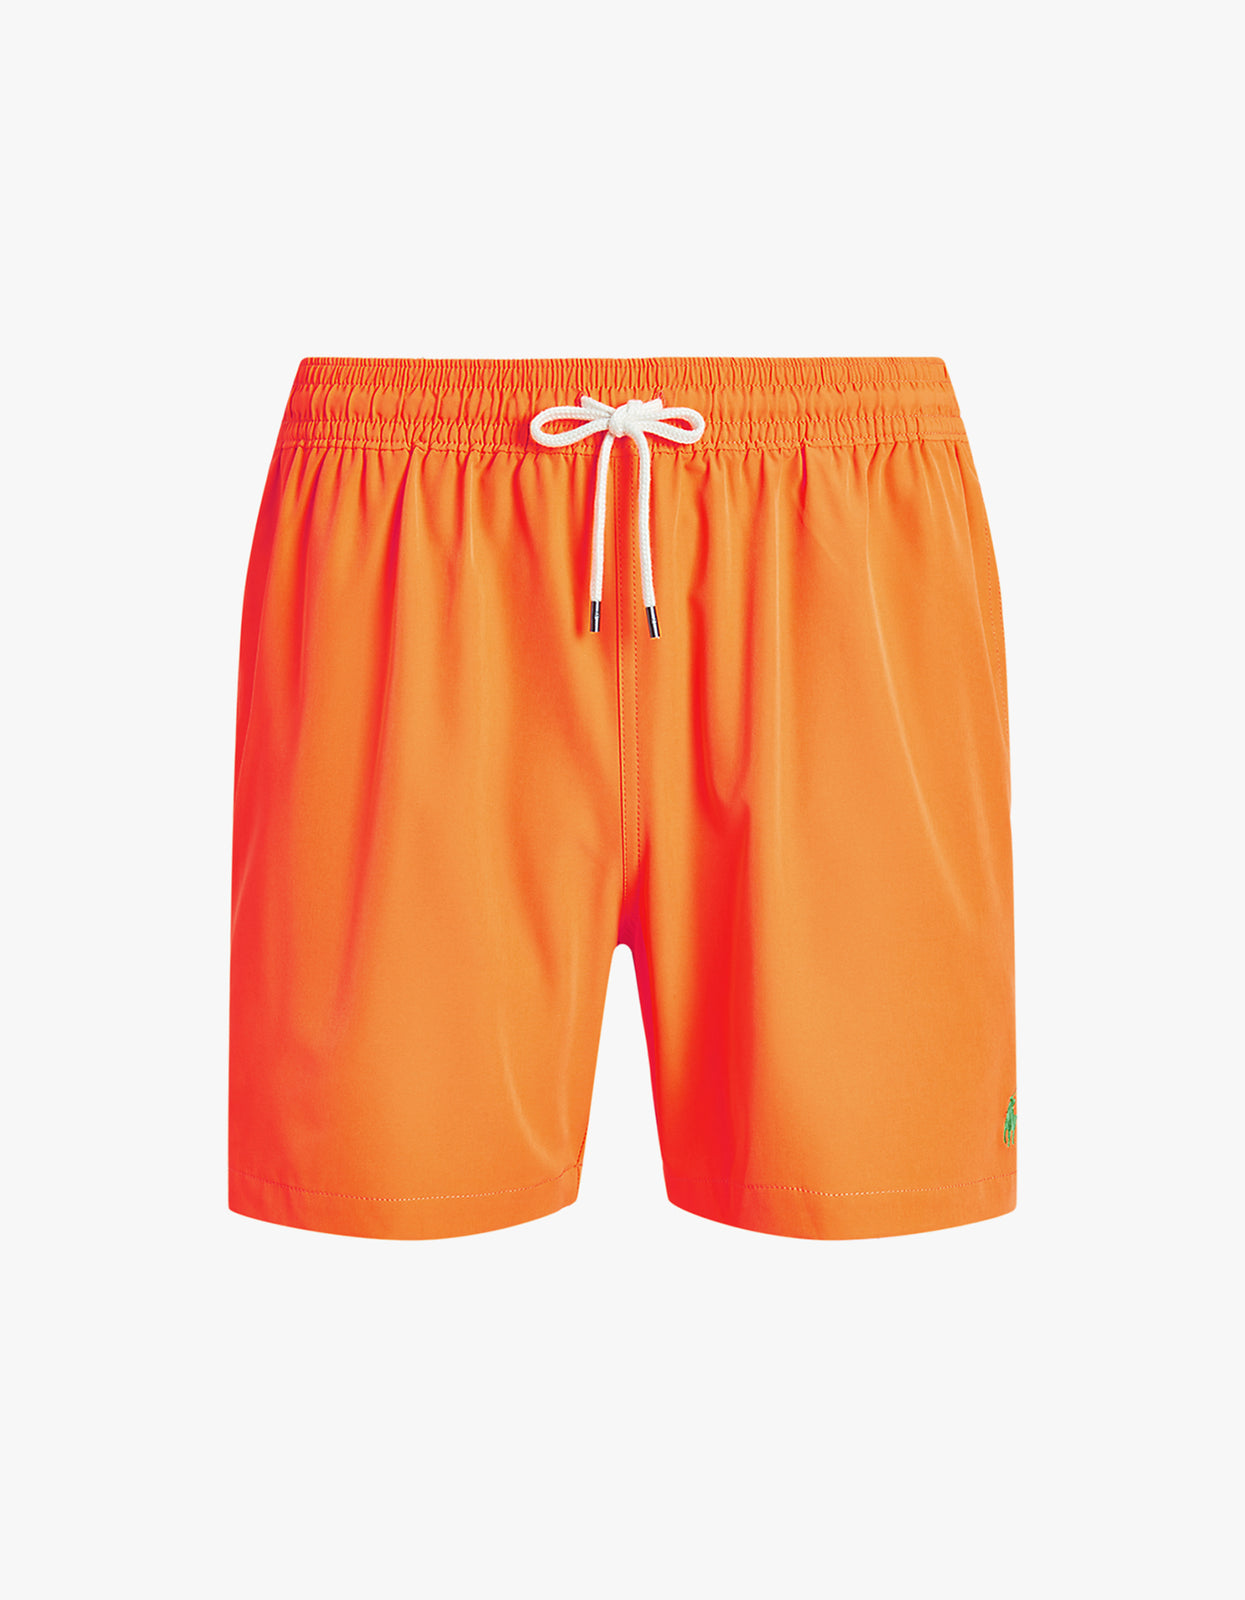 Superette | Traveler Swim Short - Blaze Racing Orange